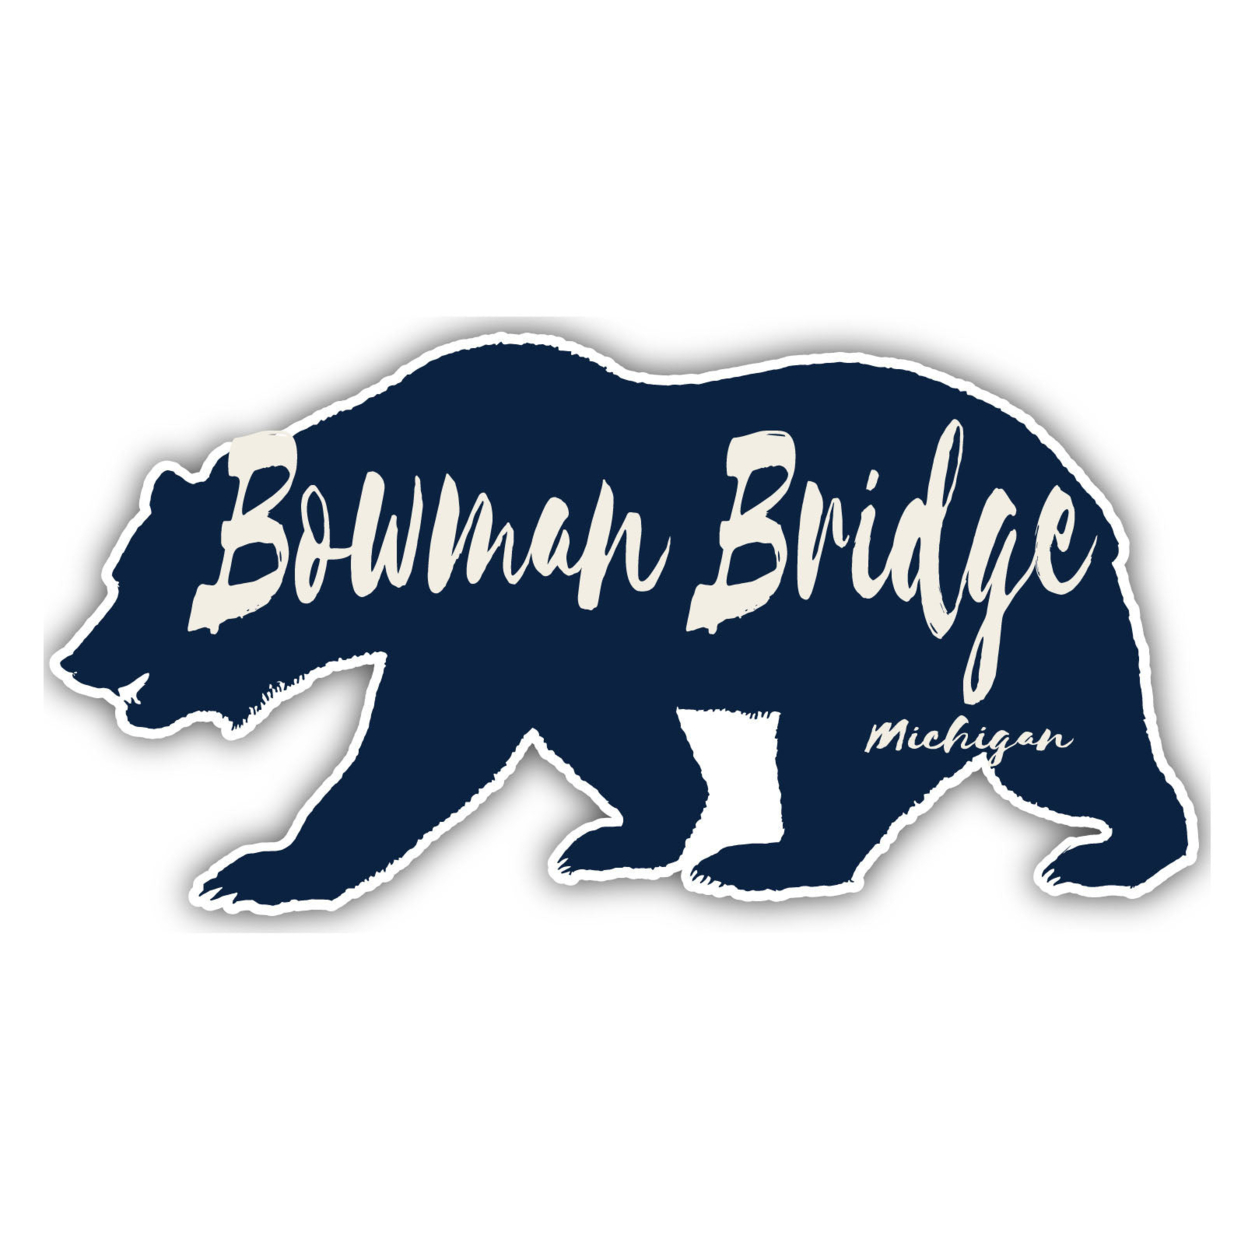 Bowman Bridge Michigan Souvenir Decorative Stickers (Choose Theme And Size) - Single Unit, 10-Inch, Bear